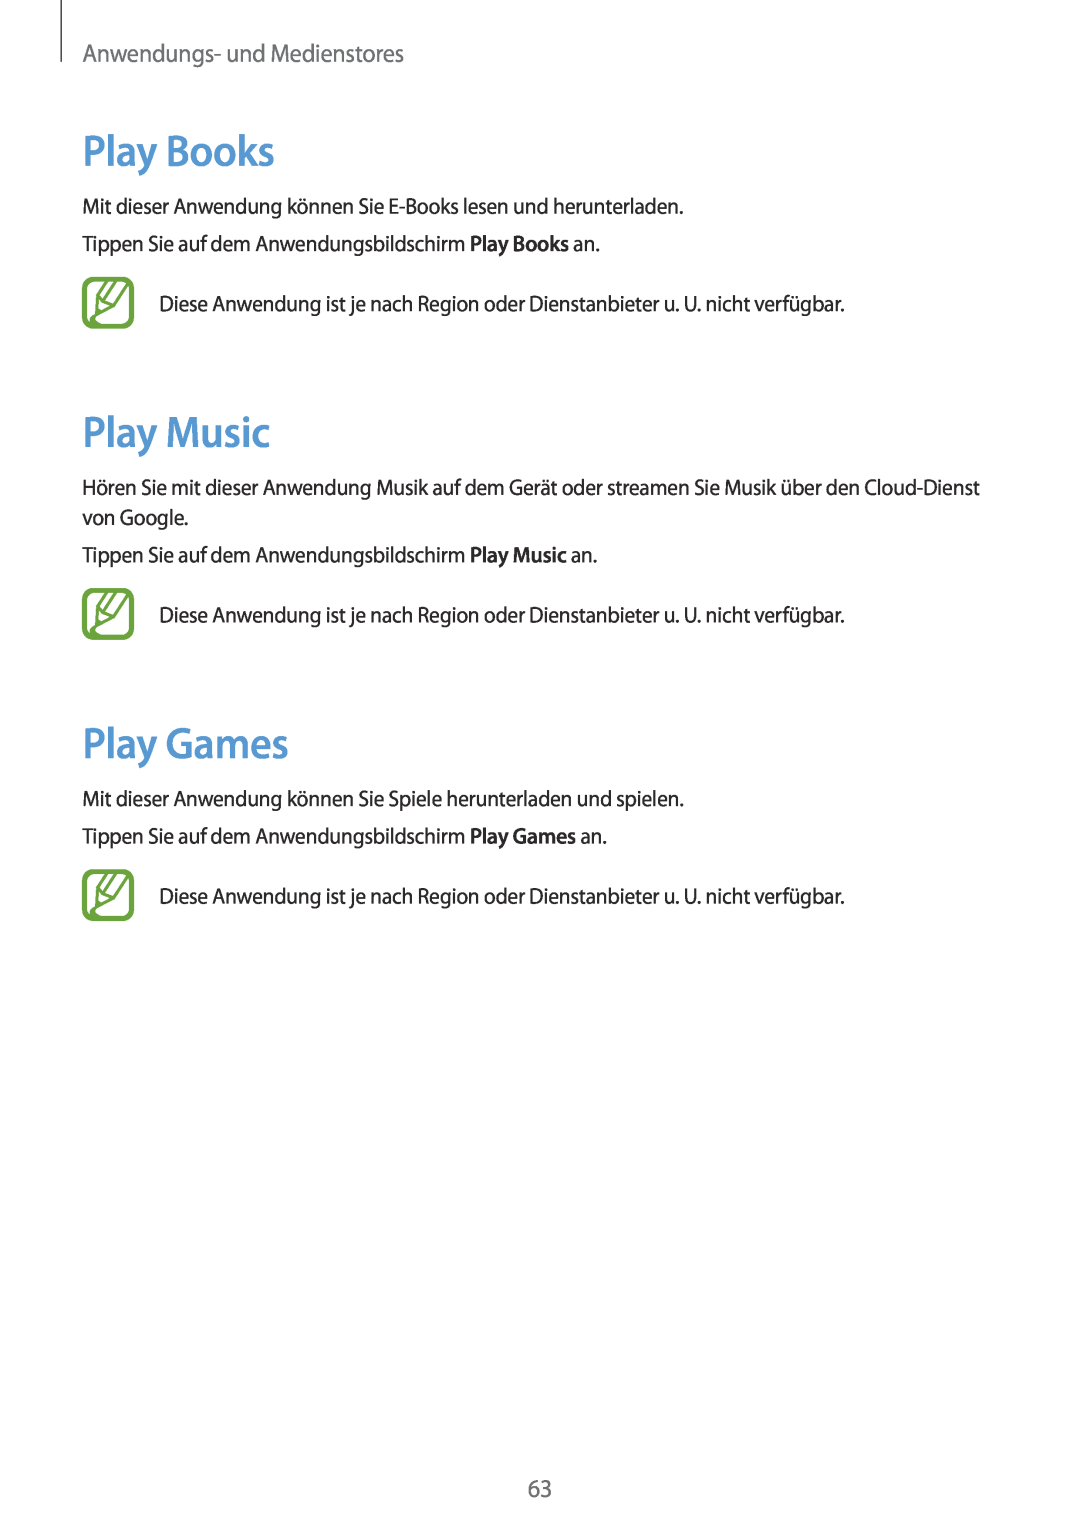 Samsung SM-T110NDWATUR, SM-T110NYKATPH, SM-T110NDWADBT Play Books, Play Music, Play Games, Anwendungs- und Medienstores 